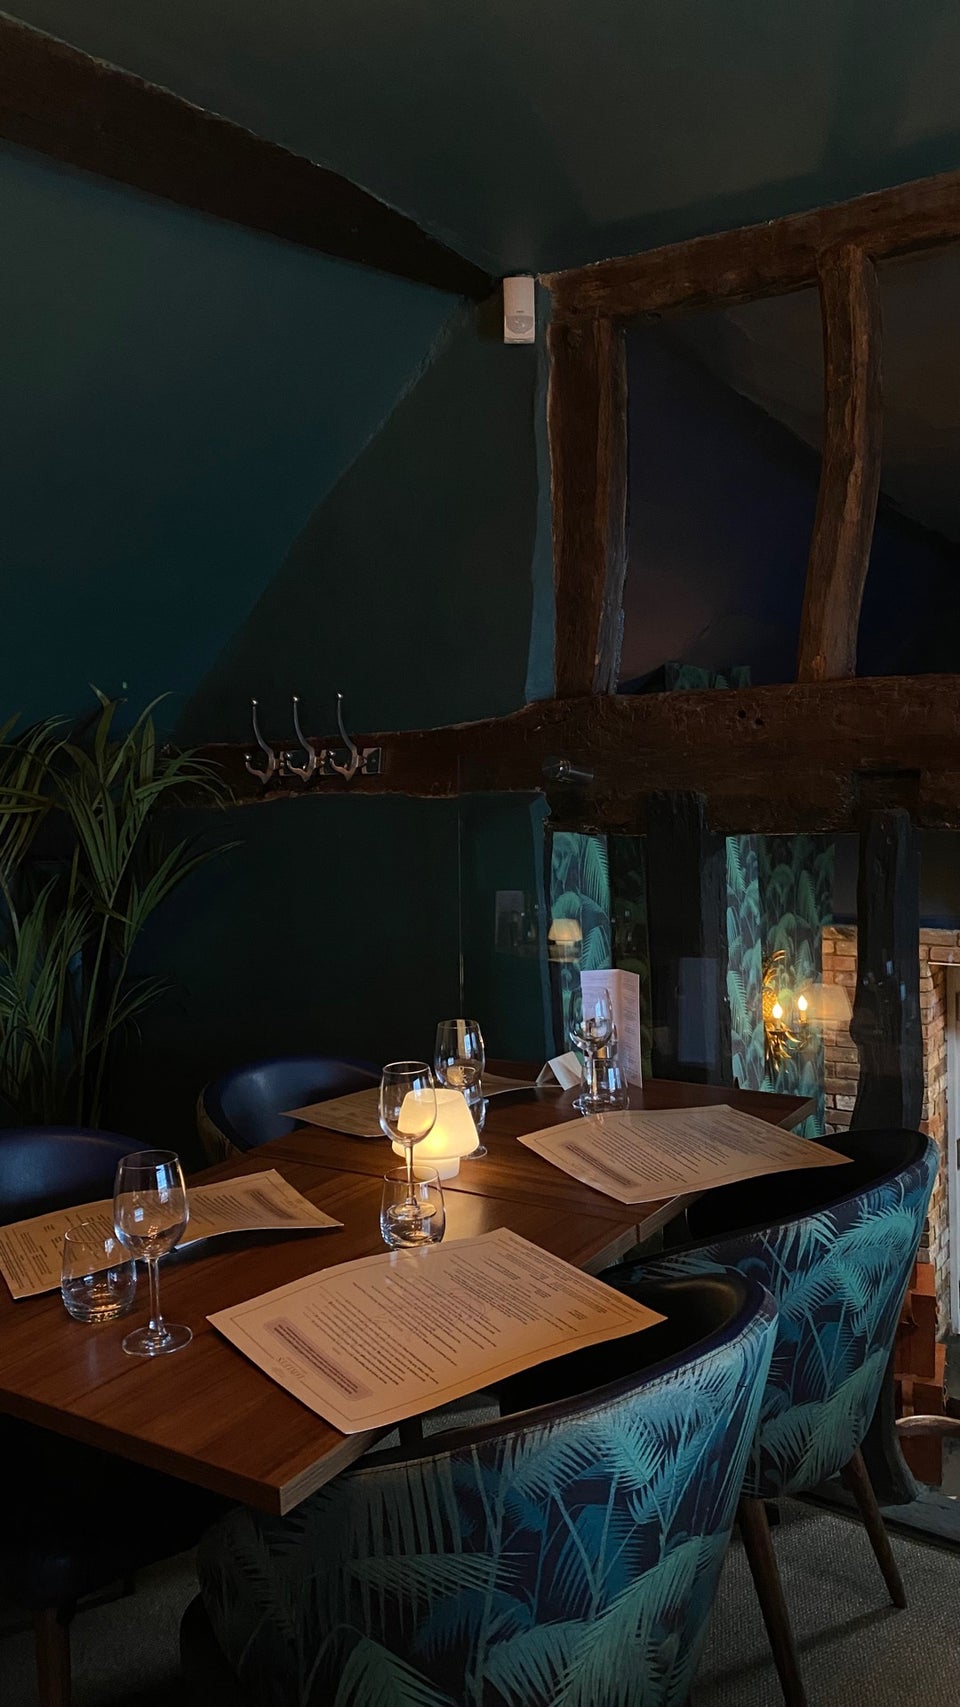 Loxleys Restaurant & Wine Bar